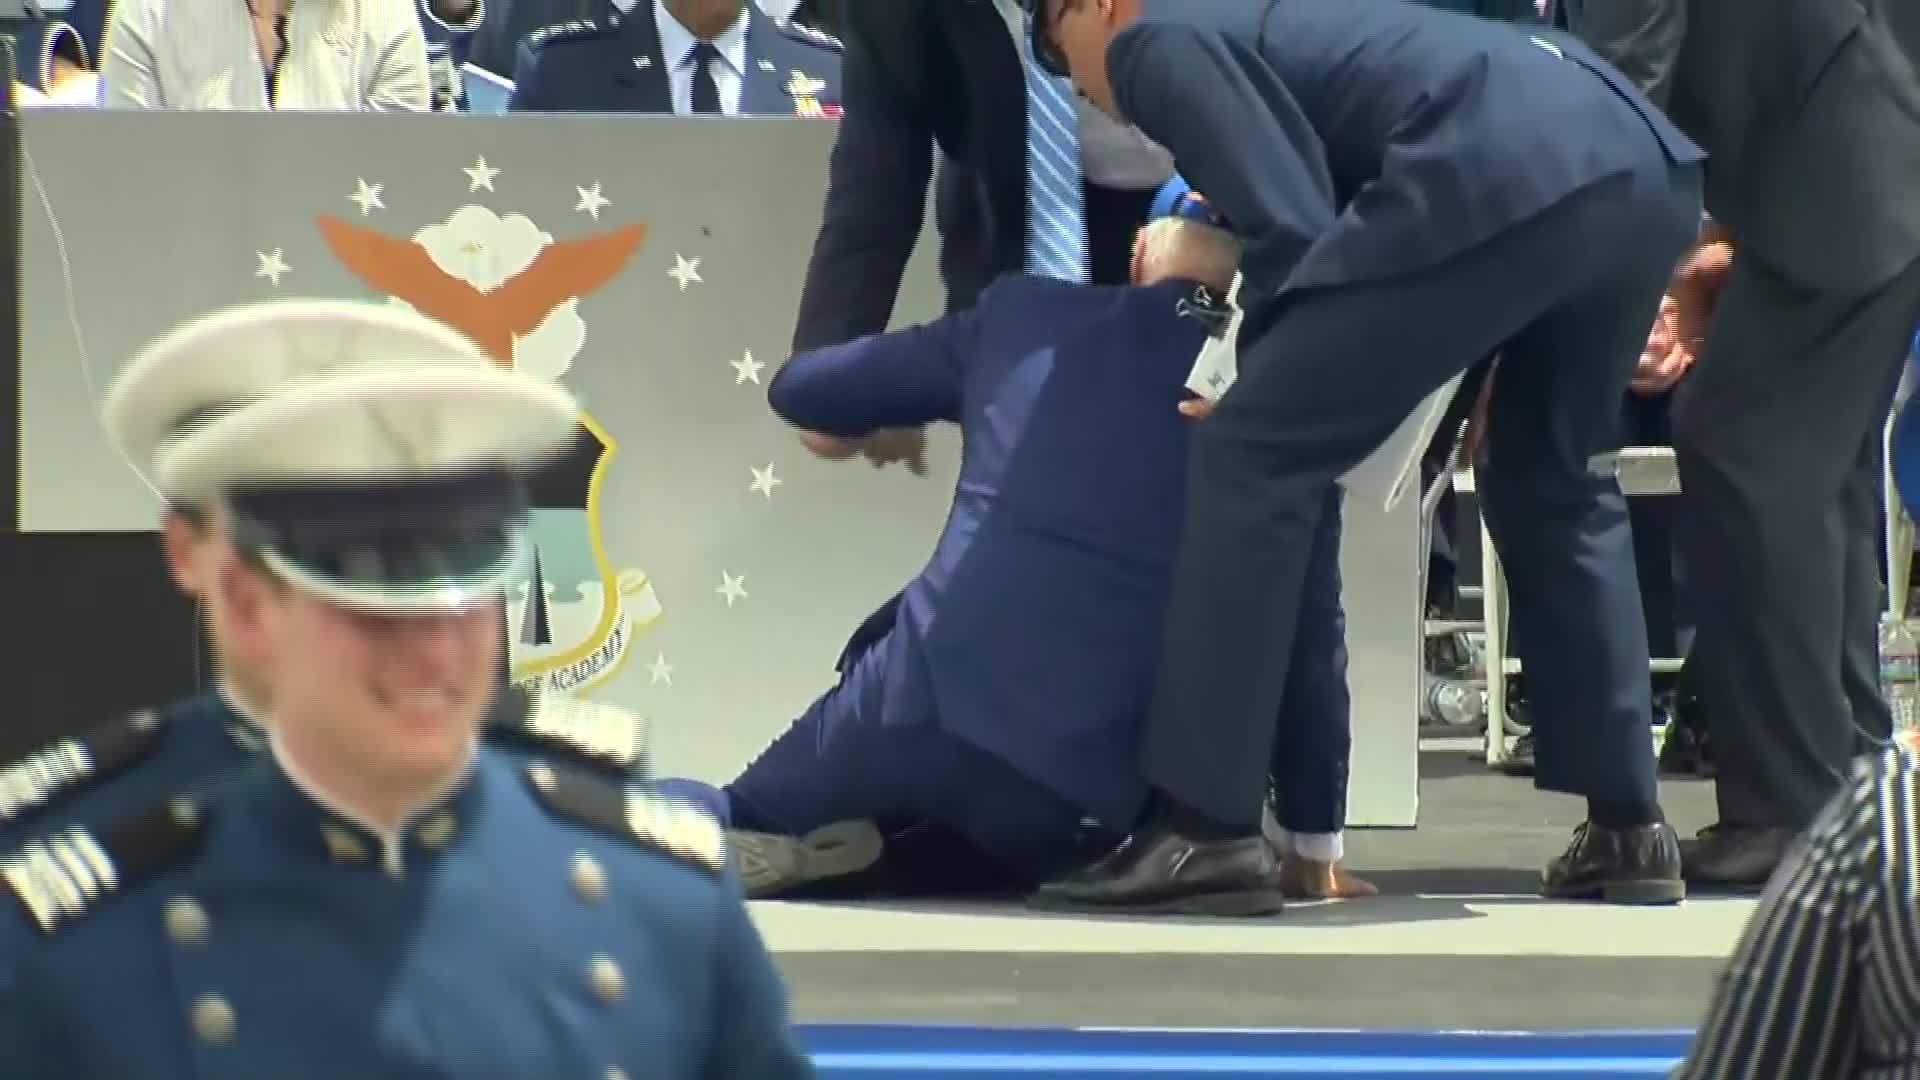 Moments of tension: President Joe Biden tripped and fell on a sandbag